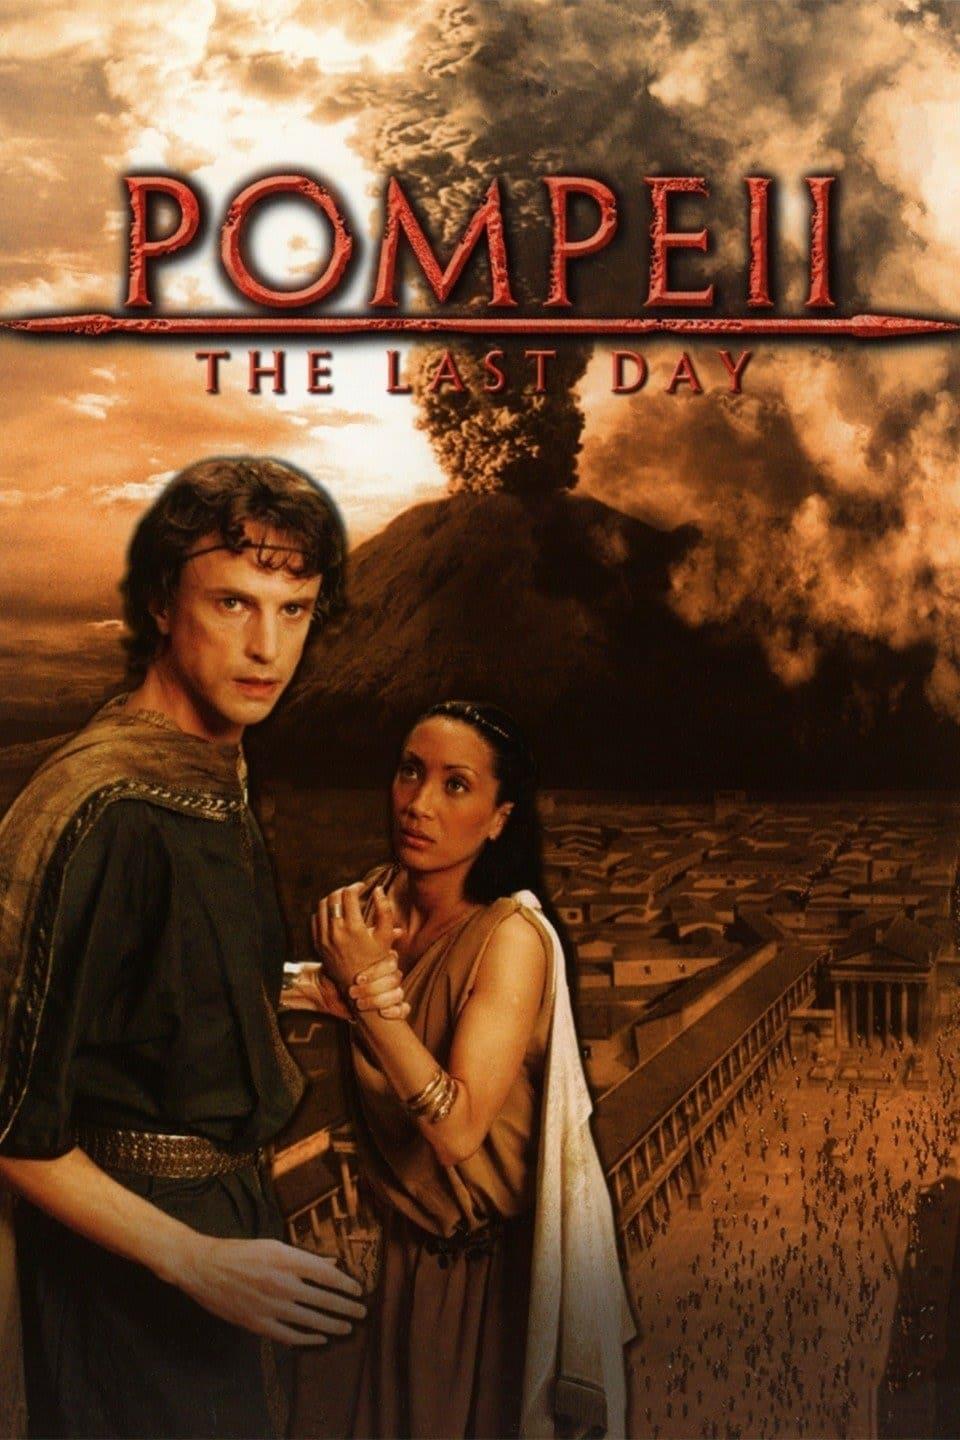 Pompeii: The Last Day poster